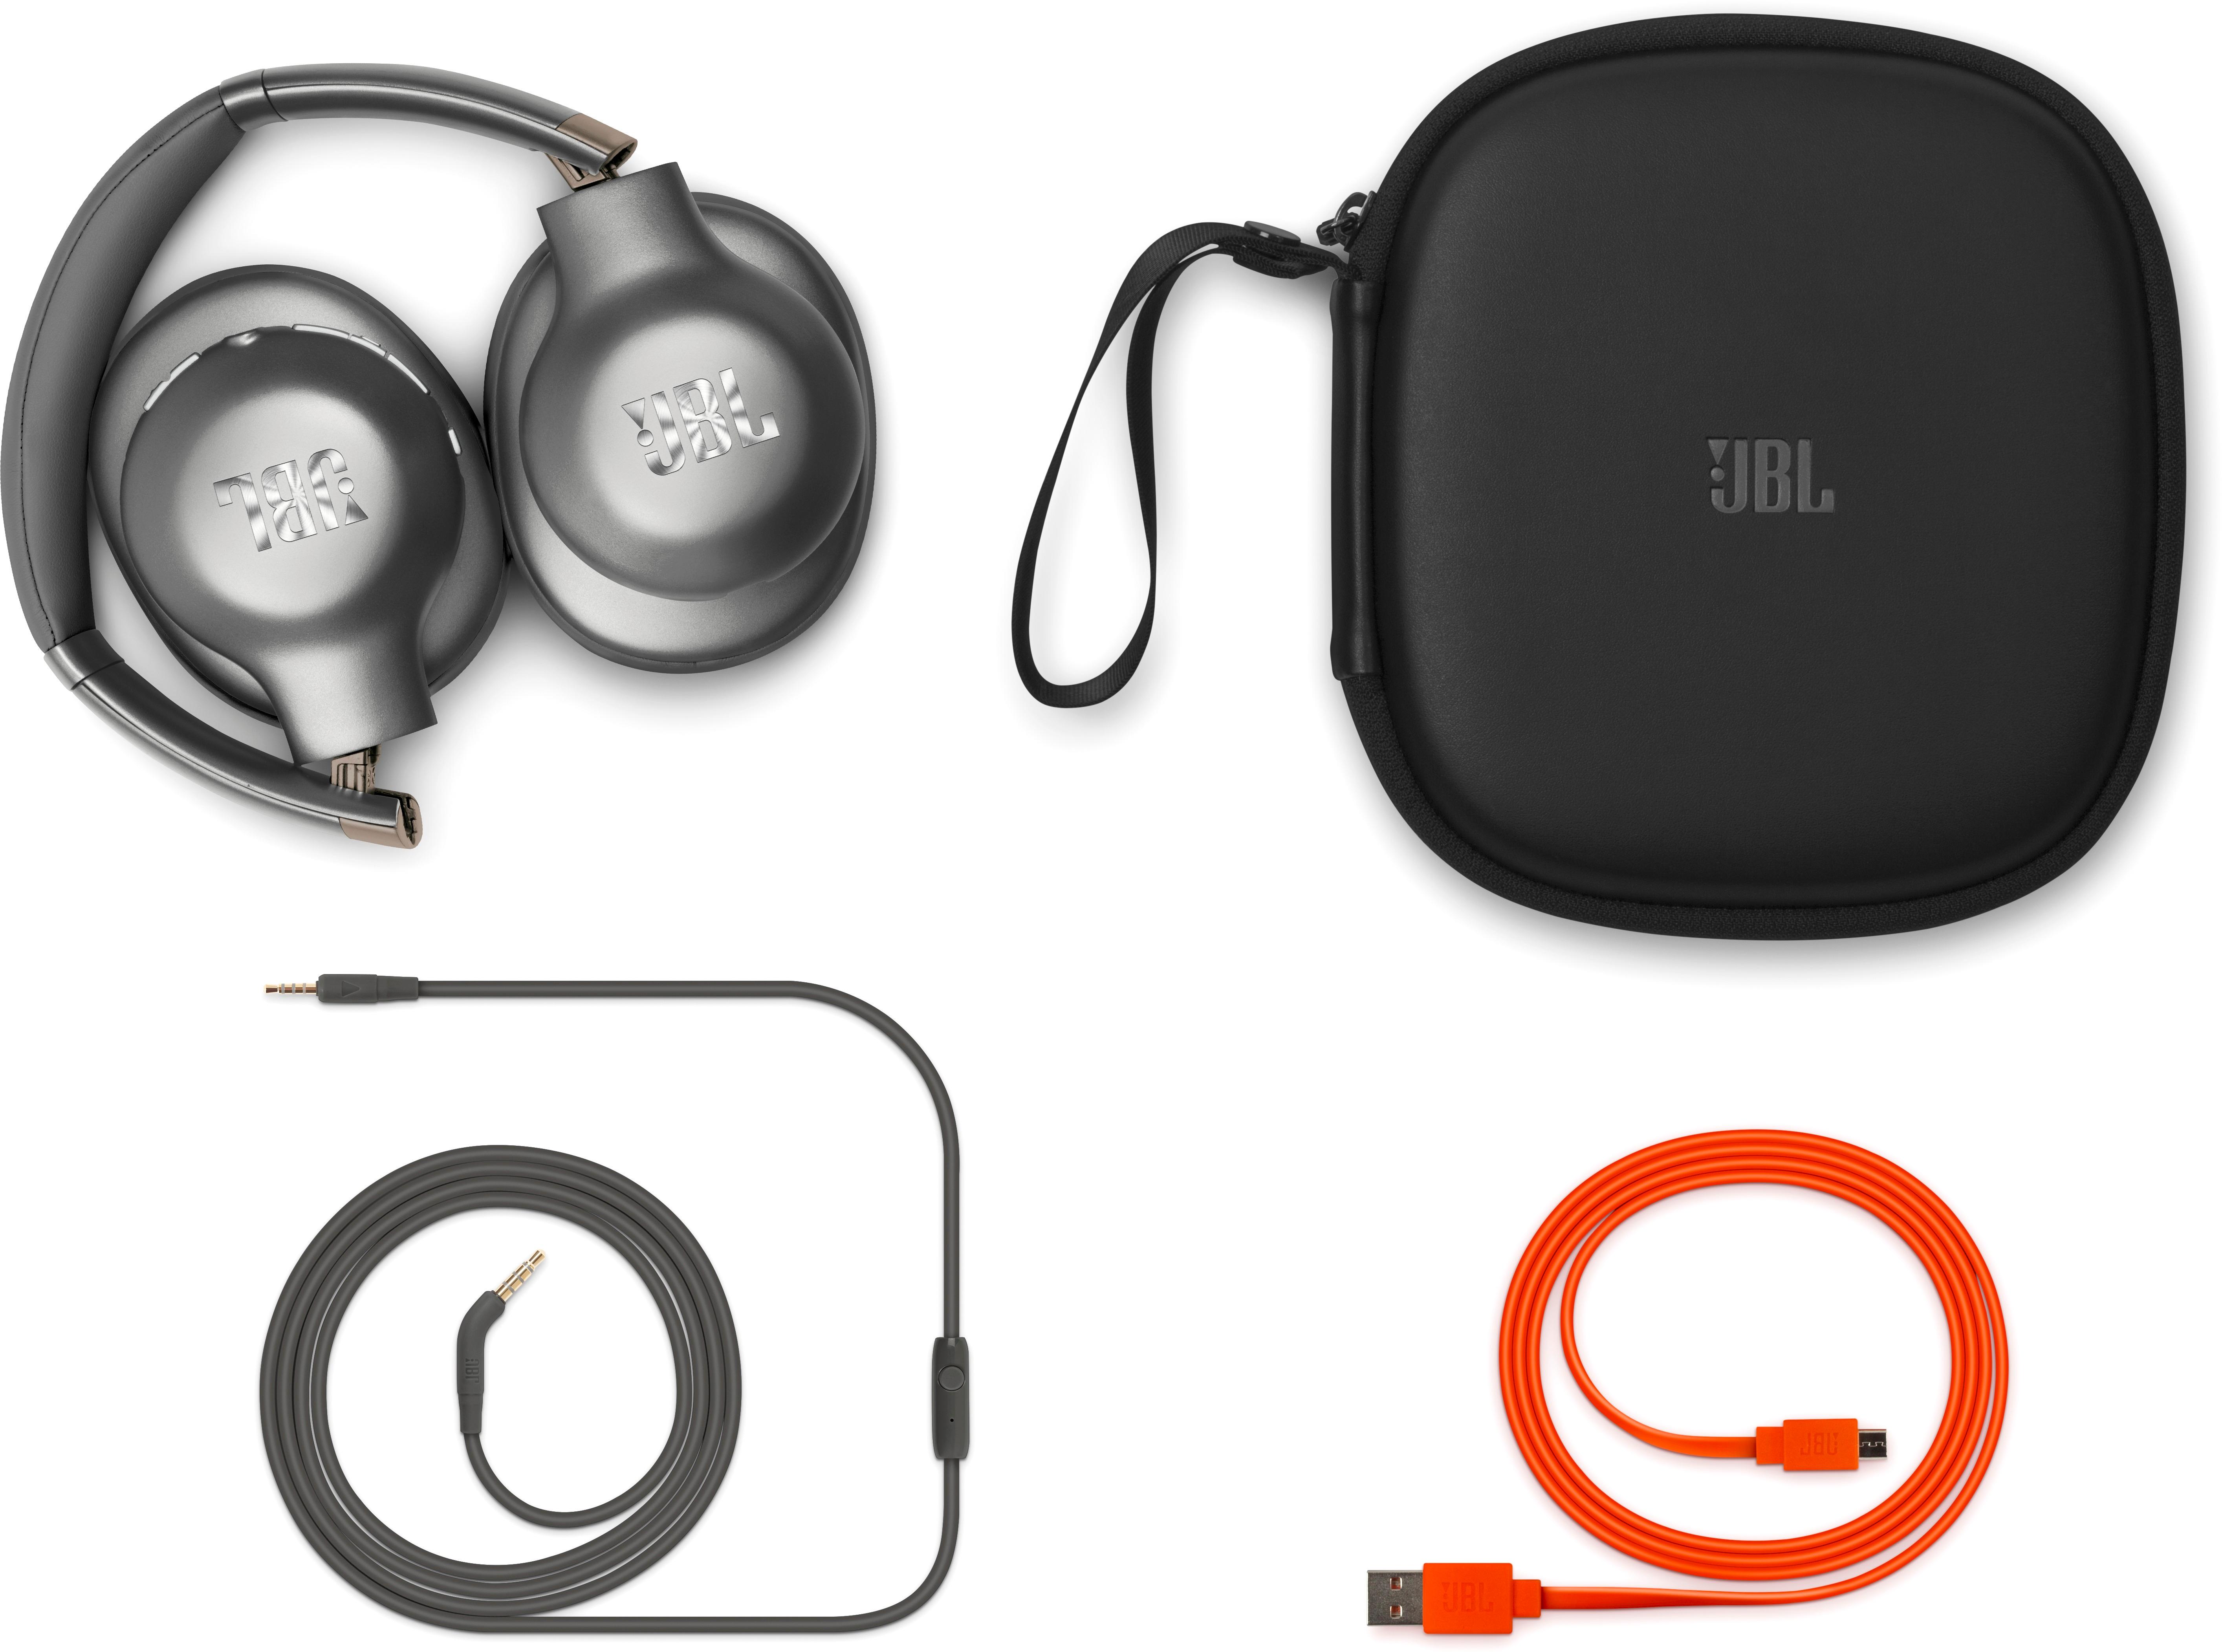 JBL EVEREST™ 710  Wireless Over-ear headphones